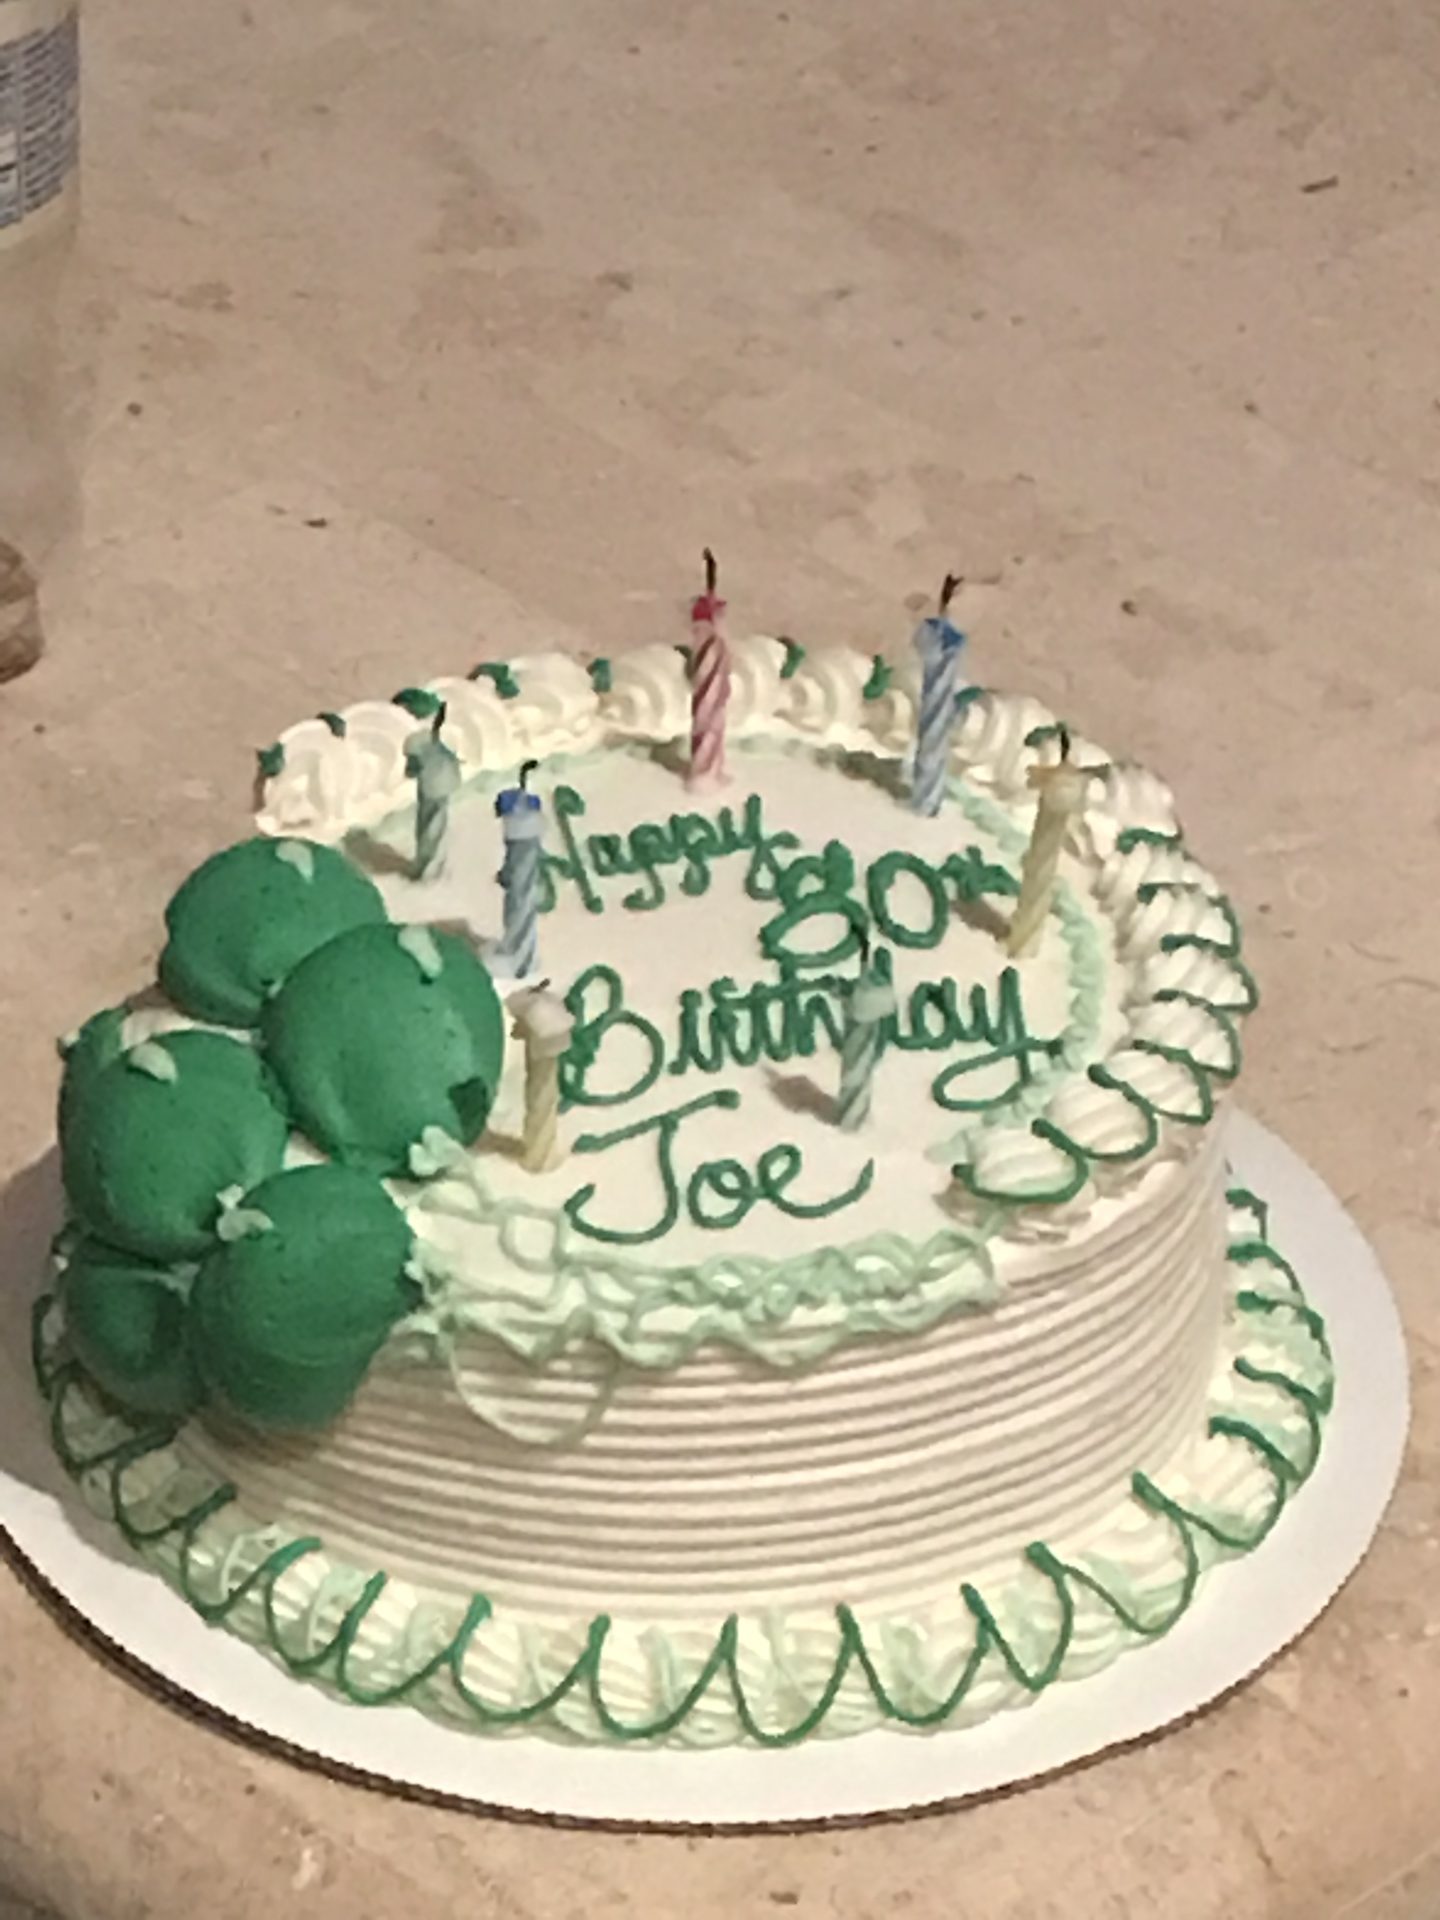 Dad’s 80th Birthday cake